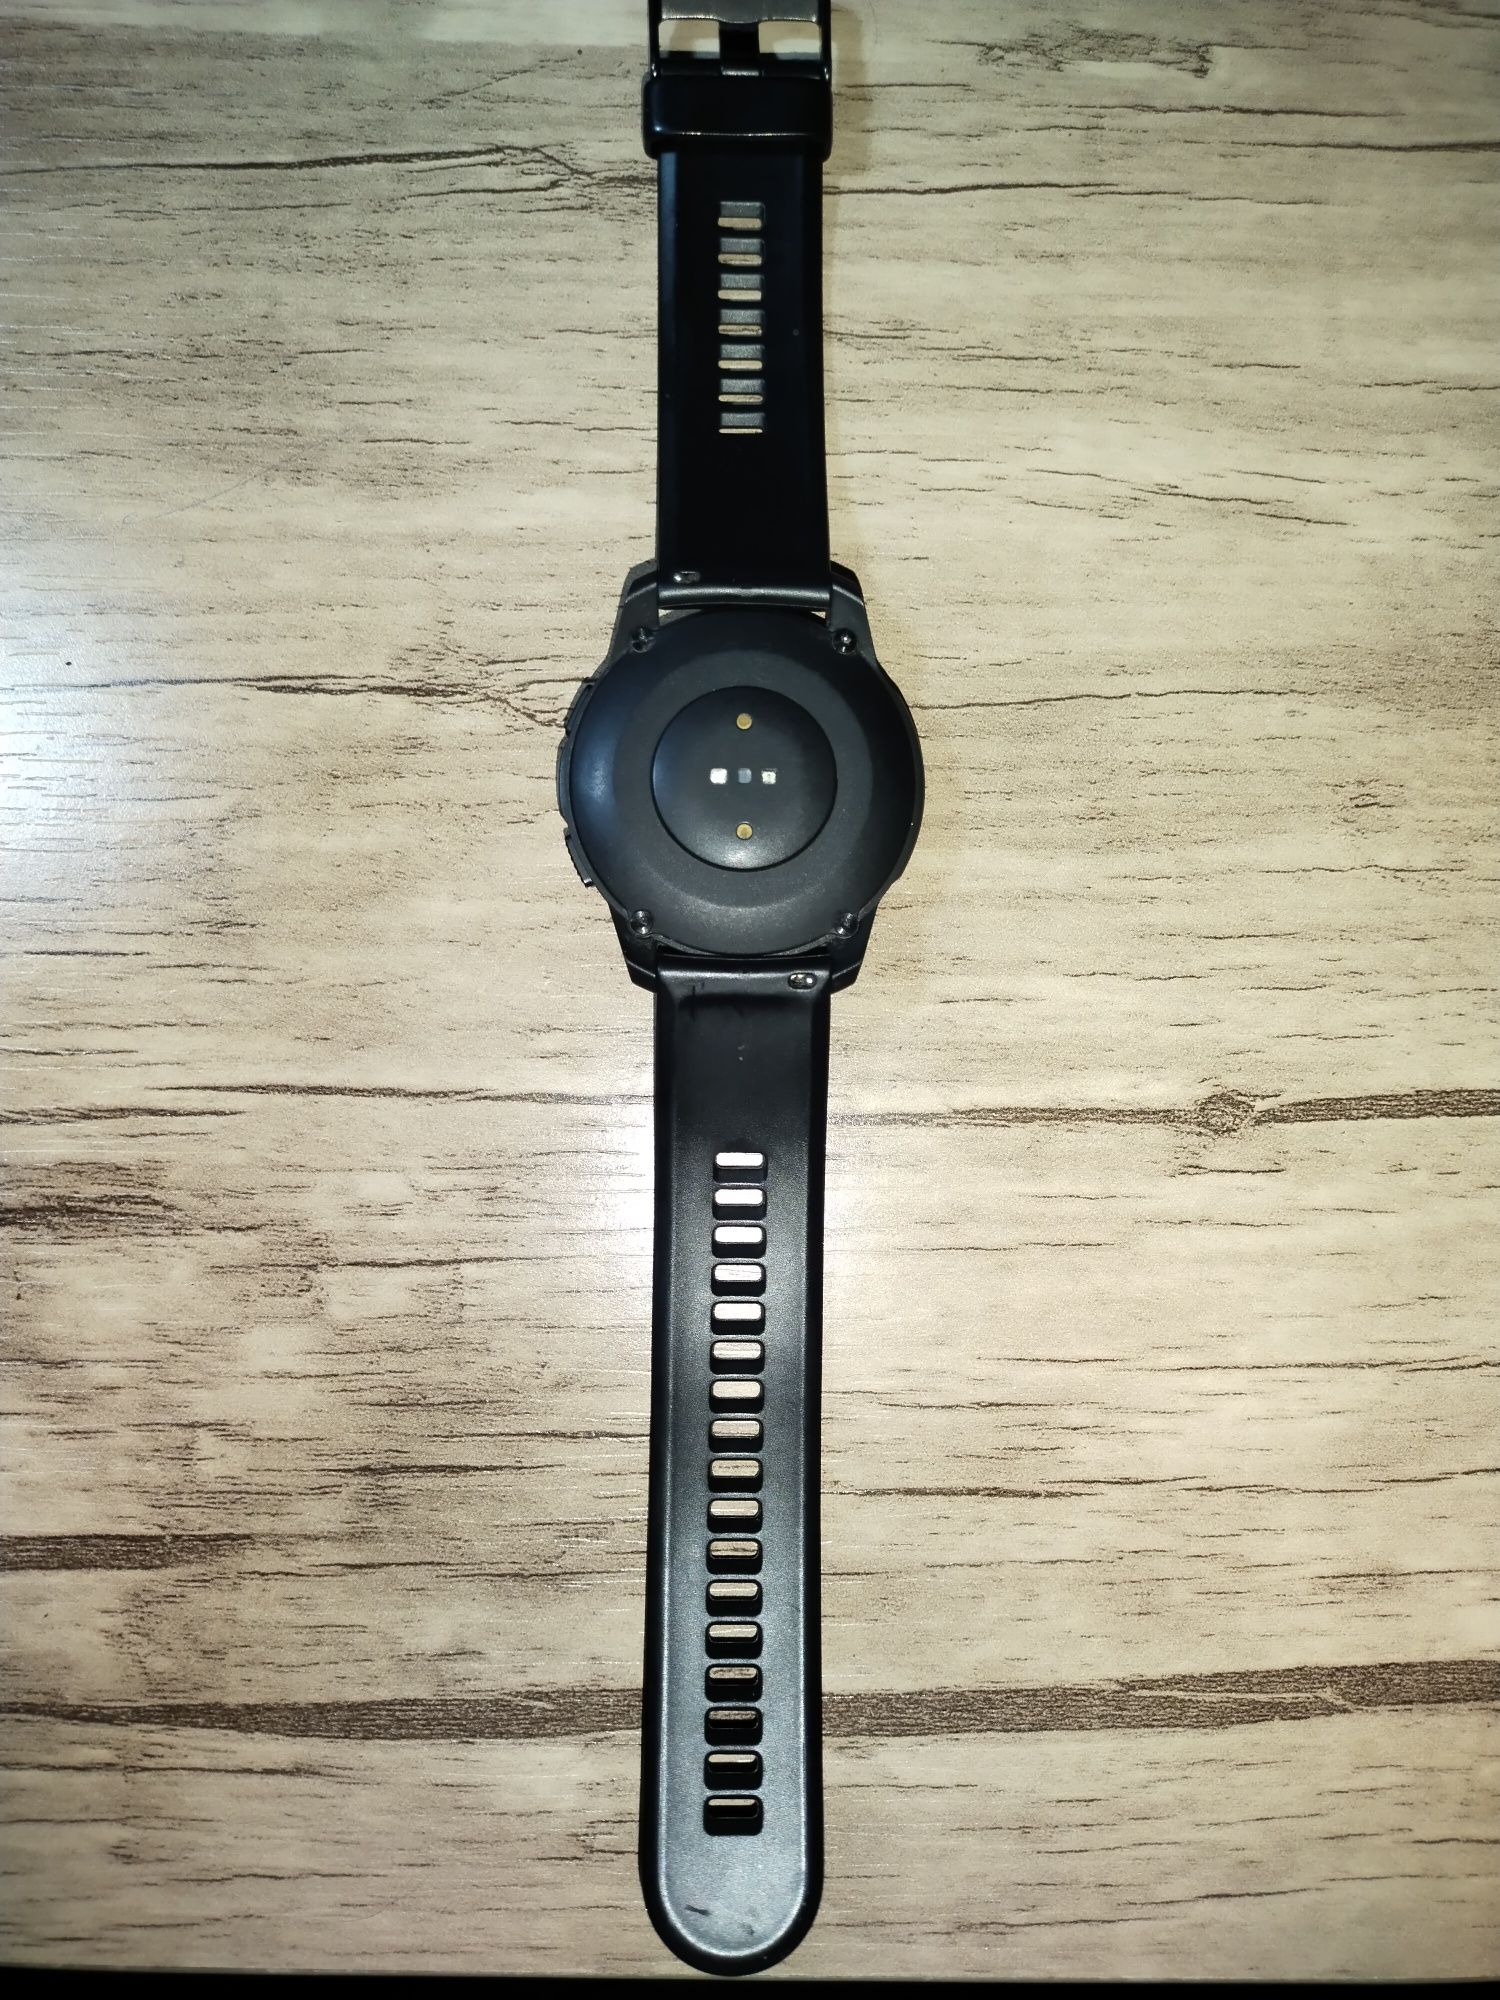 Часы Mibro Watch X1